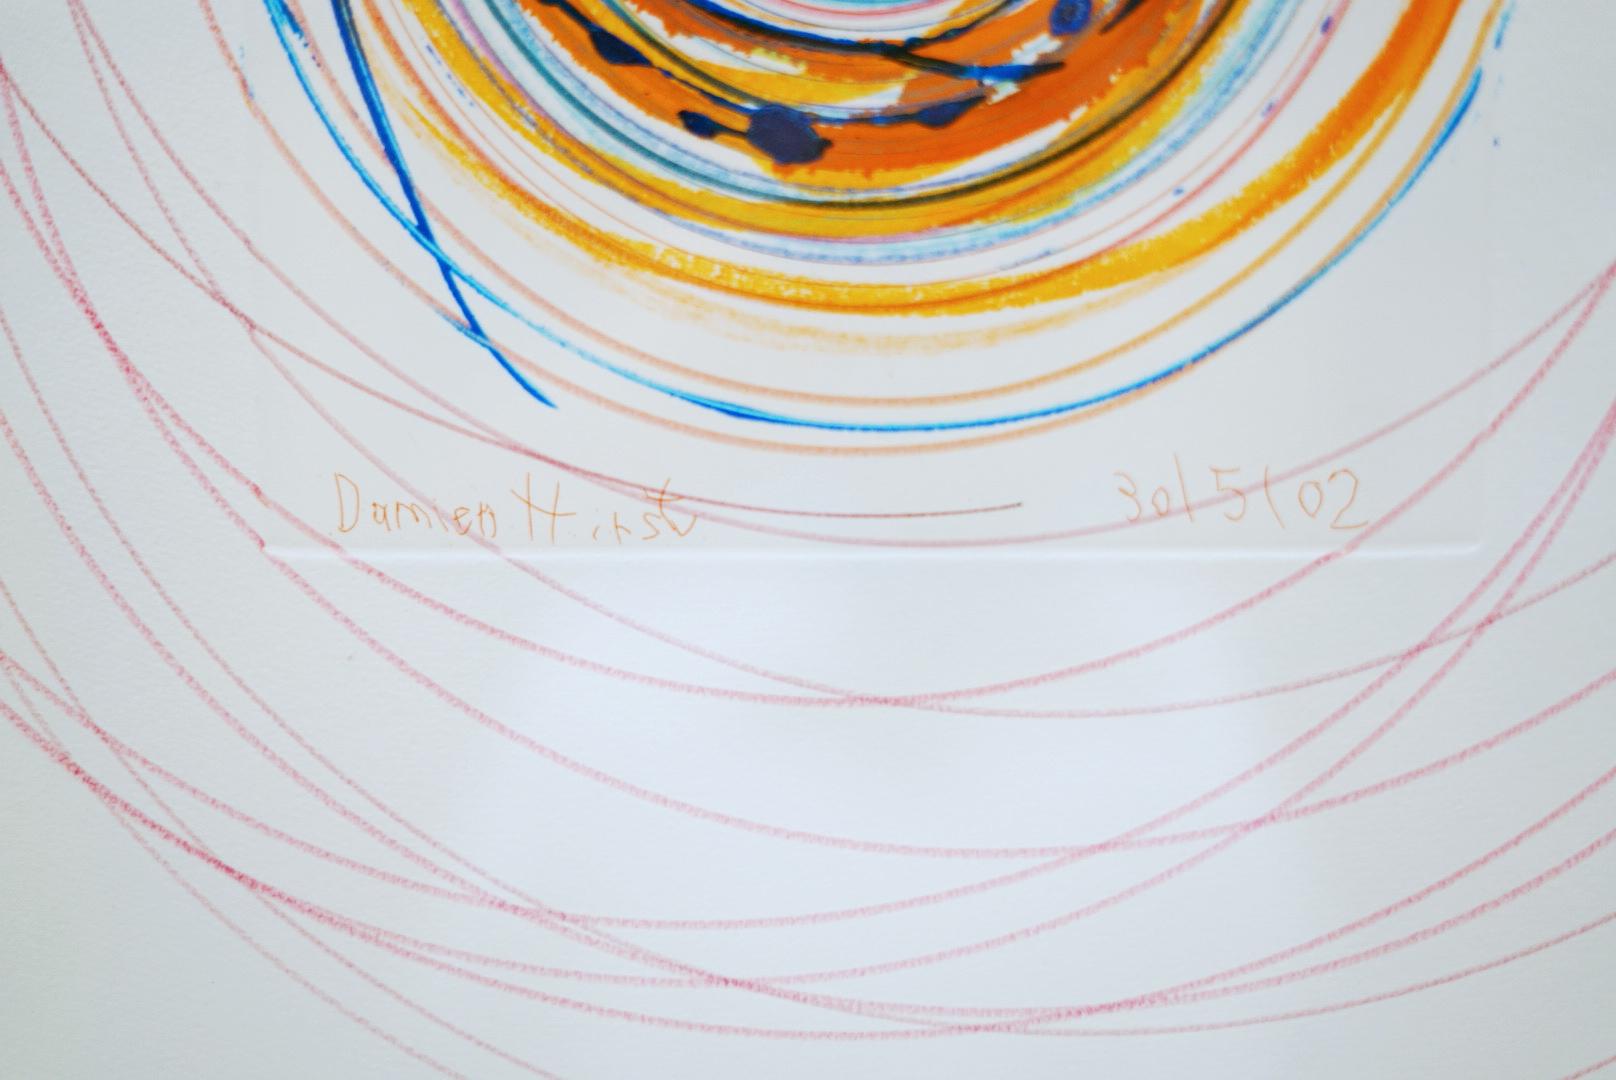 Spinning Wheel (Unique) - Art by Damien Hirst